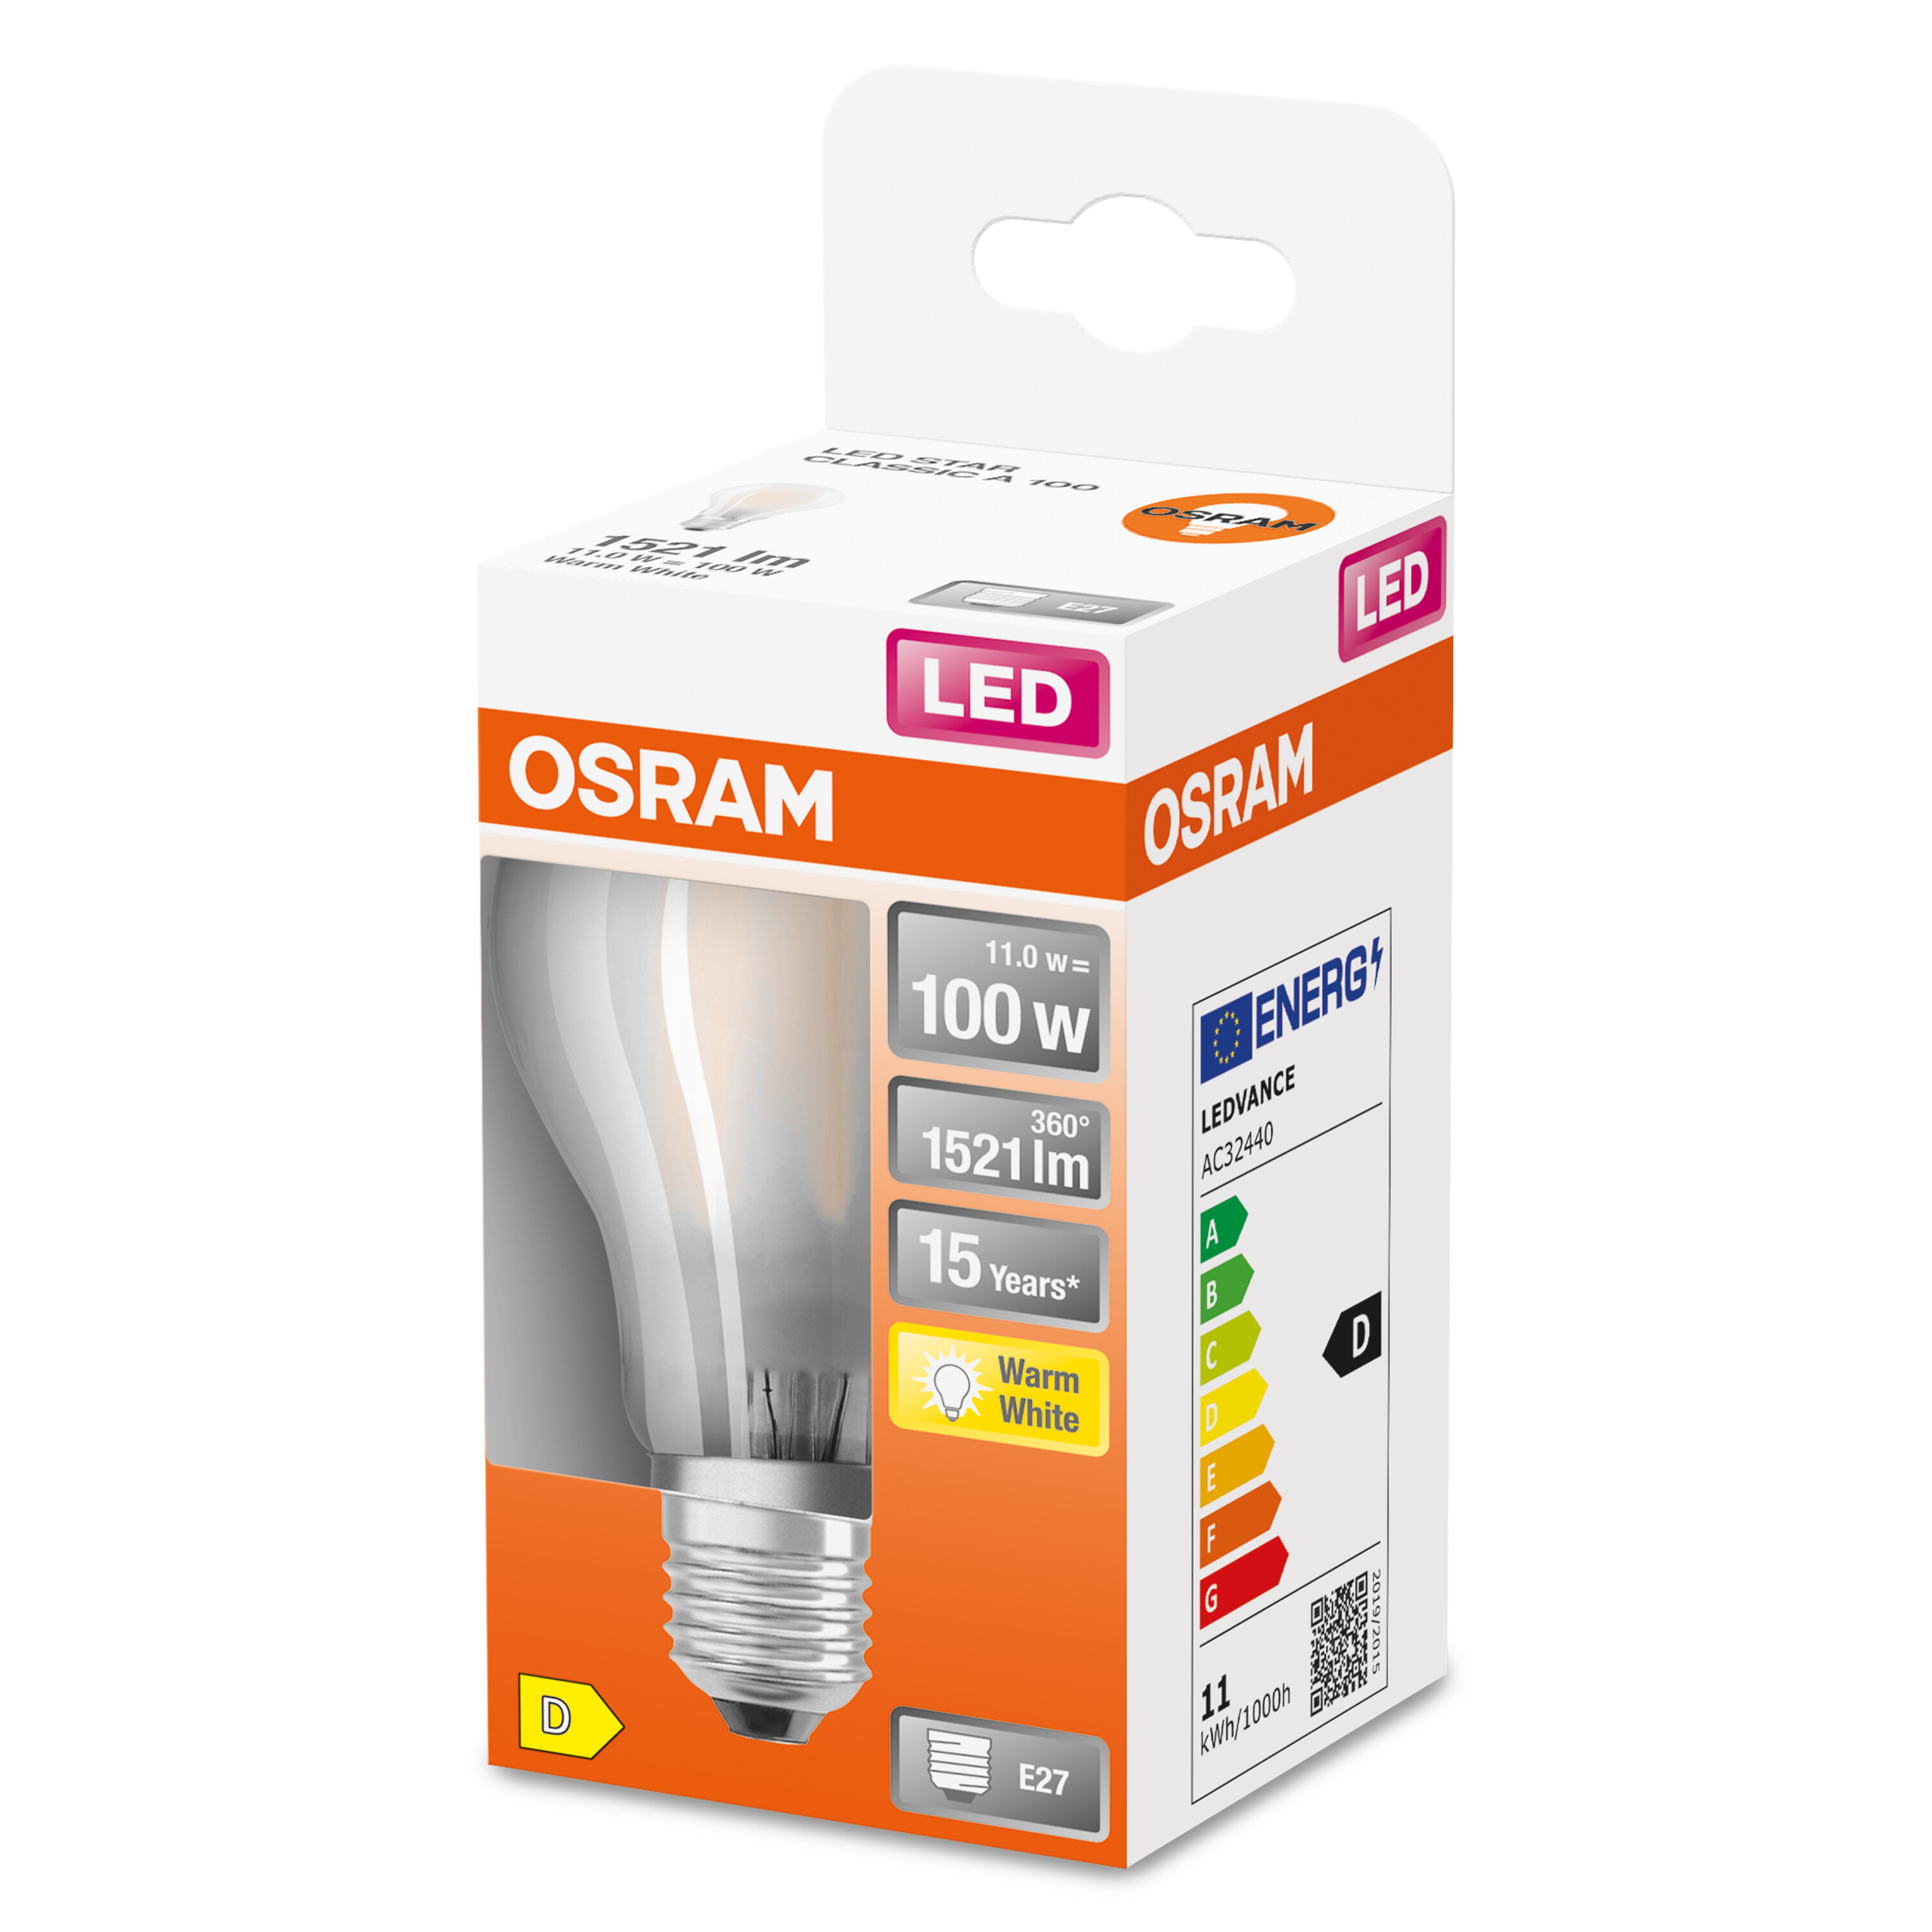 OSRAM  LED Retrofit 1521 Lumen LED CLASSIC Lampe Warmweiß A